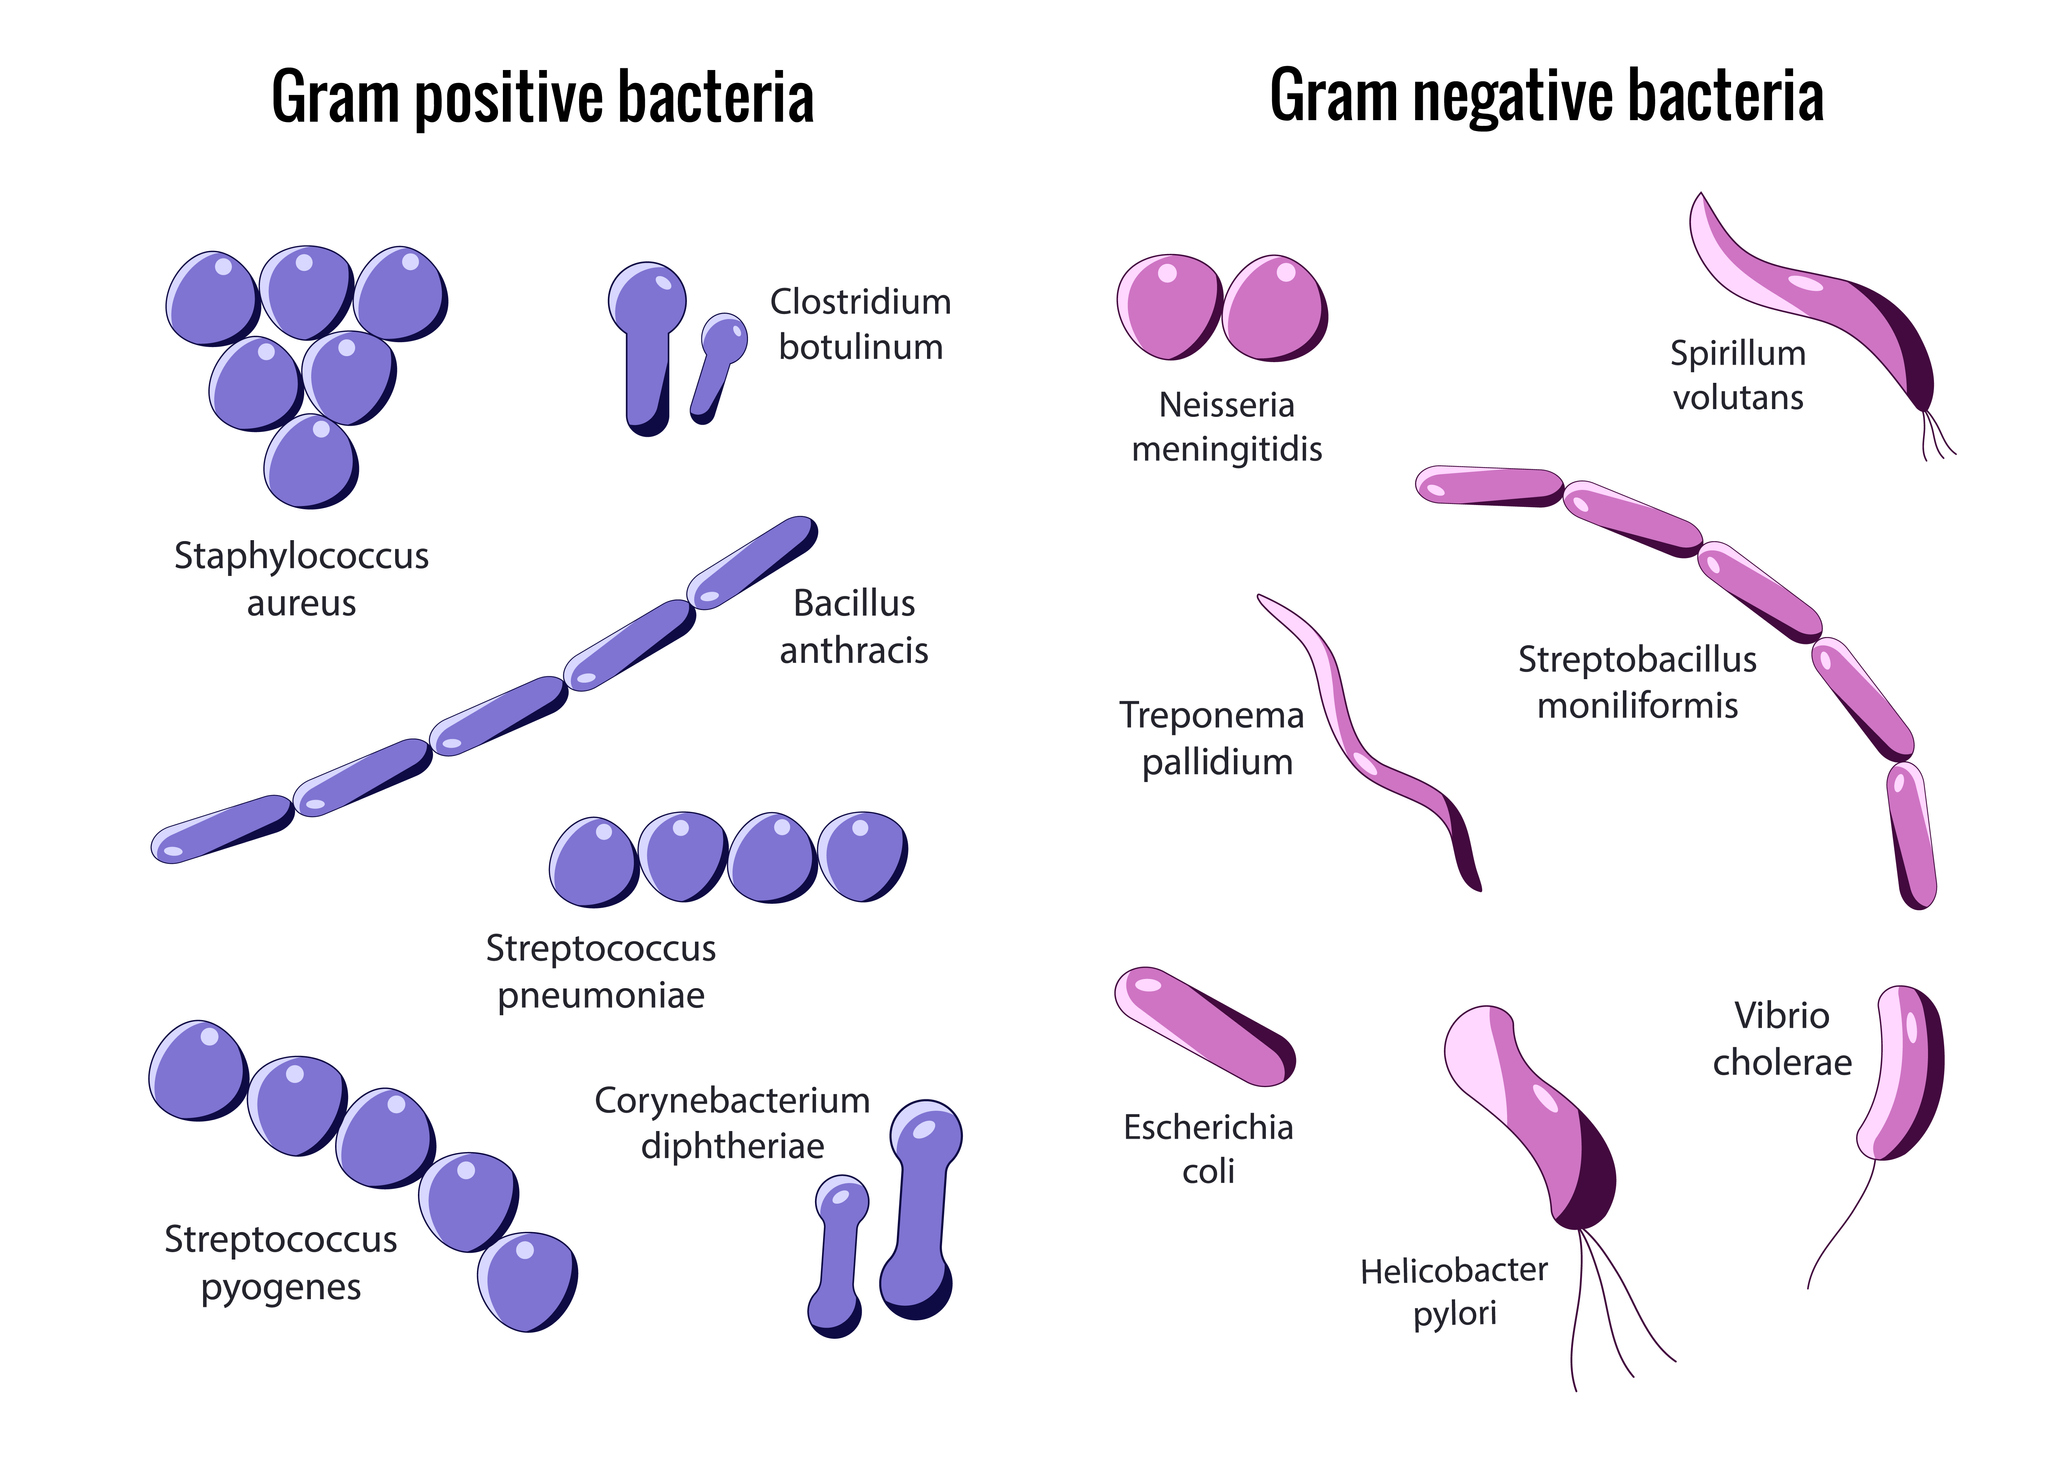 Division of Gram-positive and Gram-negative bacteria